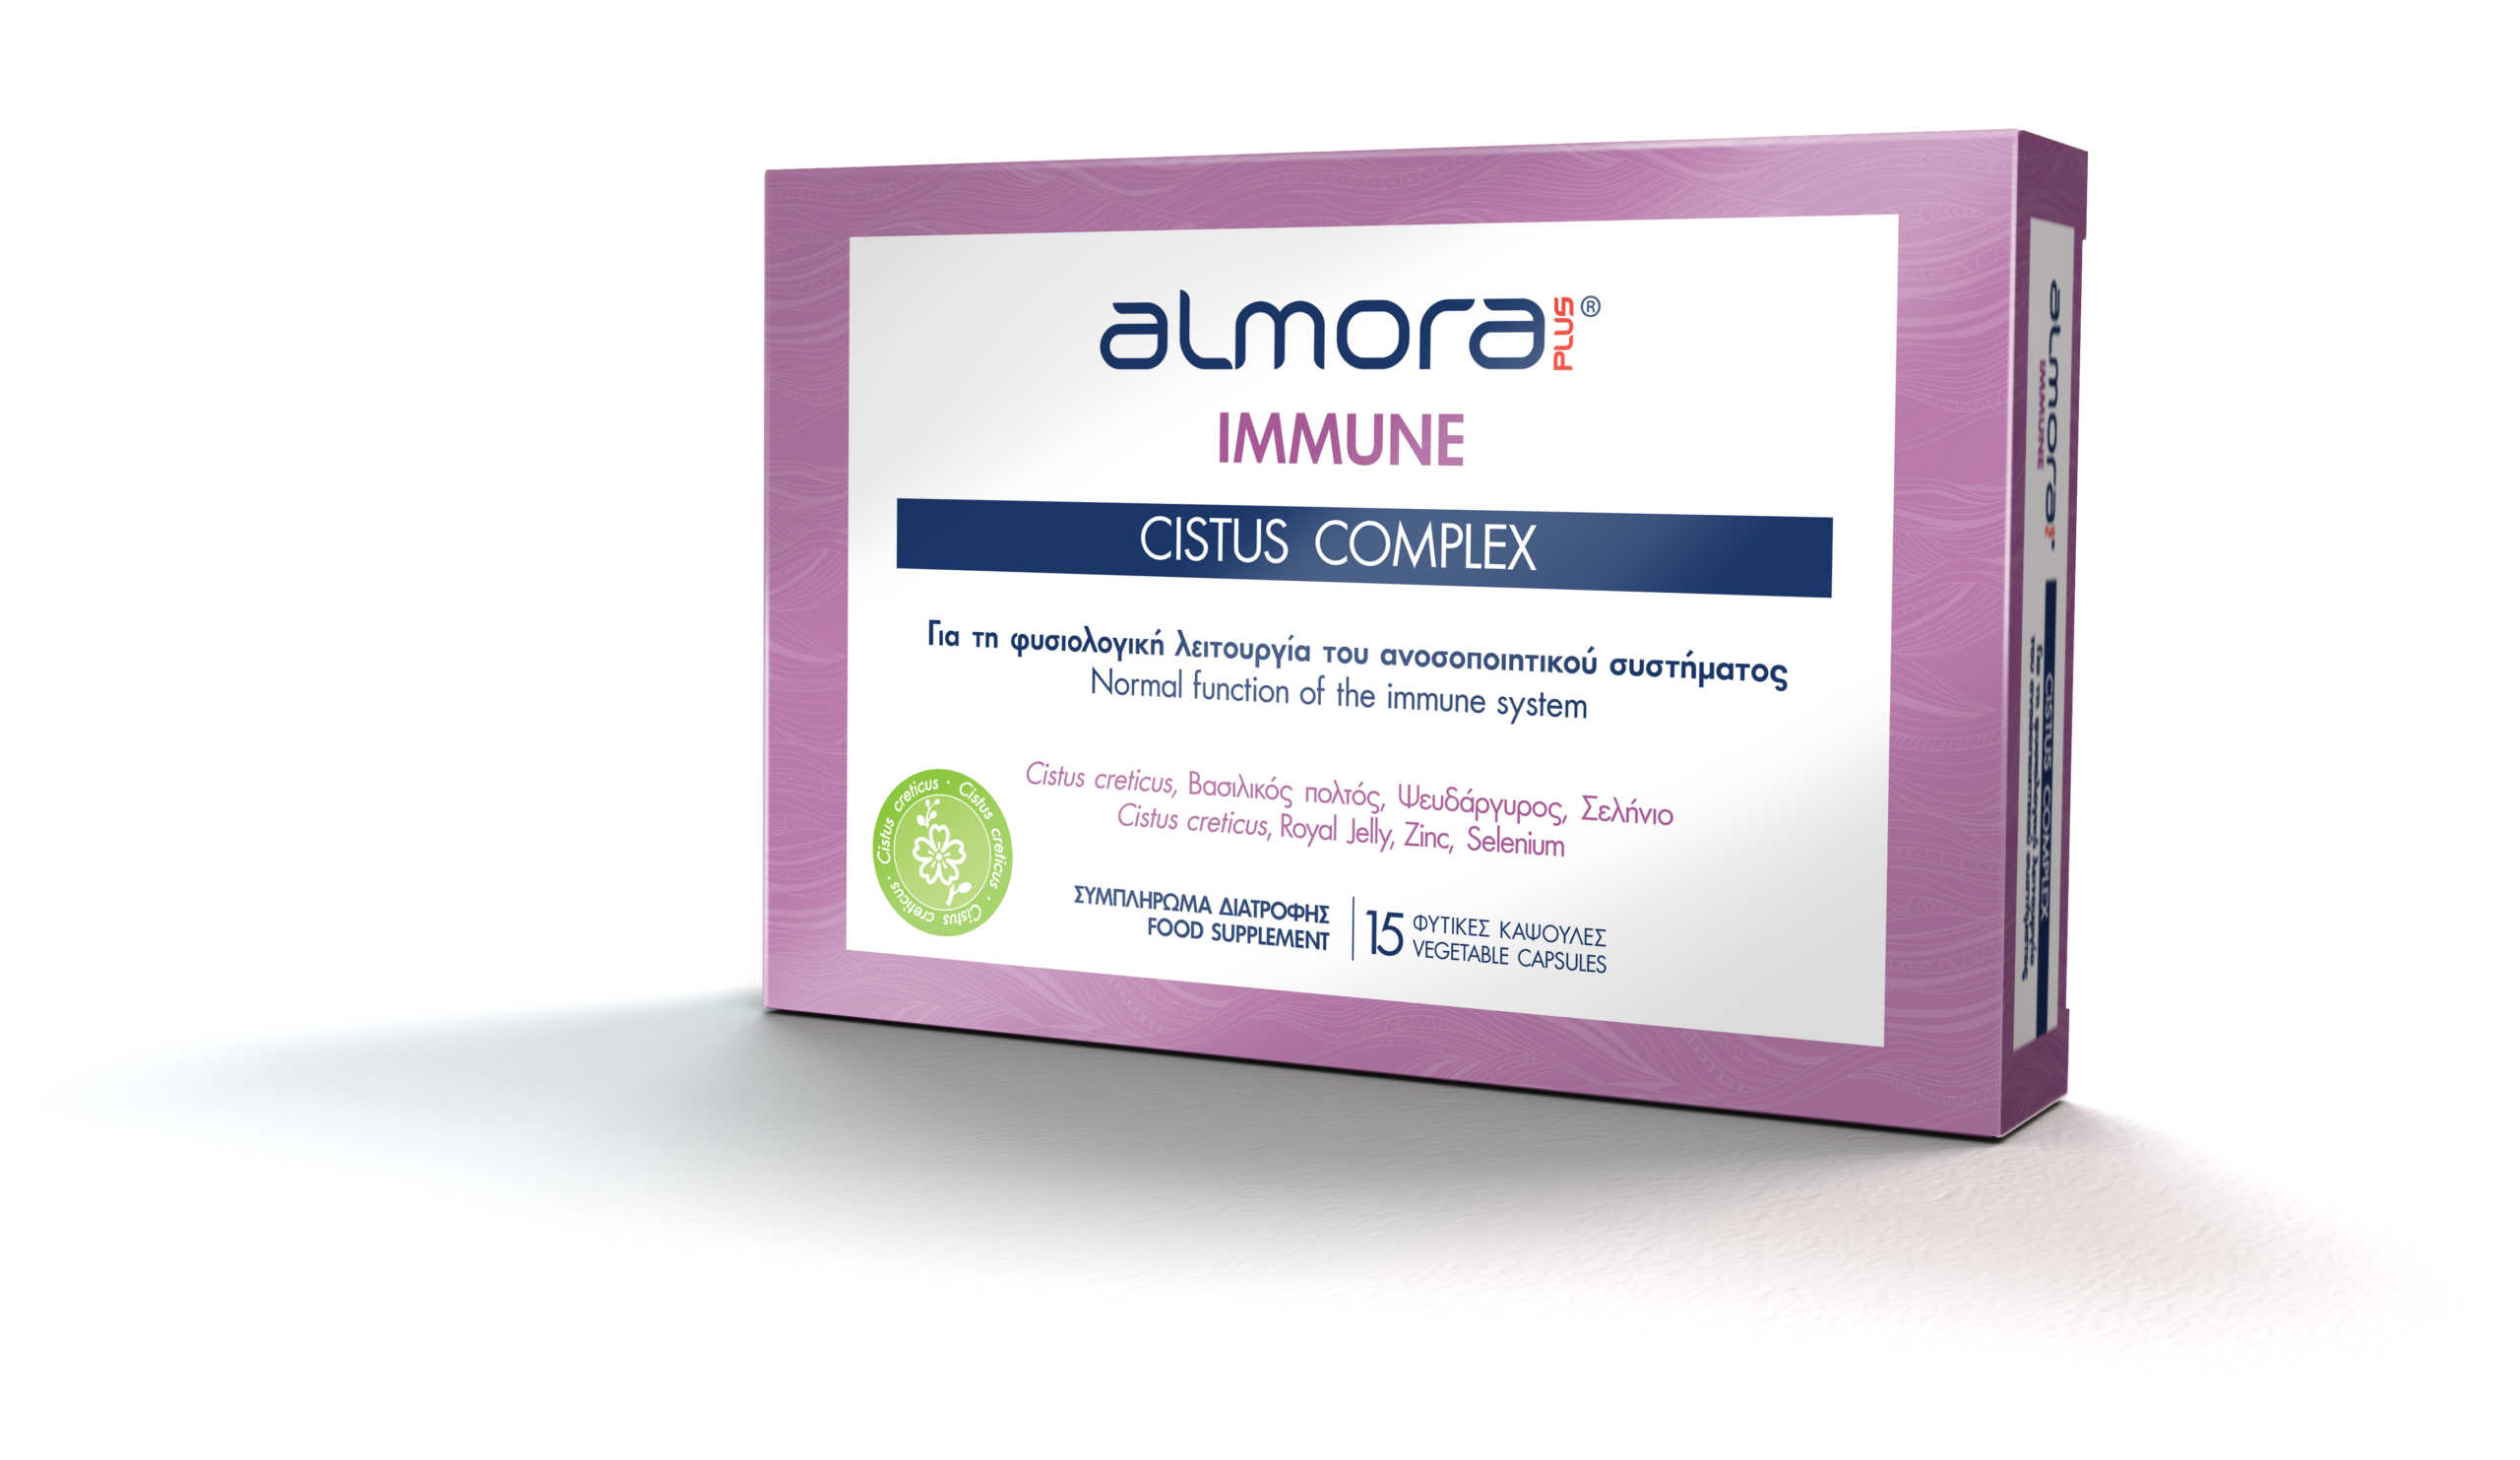 almora PLUS® IMMUNE CISTUS COMPLEX, ισχυρό ανοσοποιητικό σύστημα και θωράκιση του οργανισμού